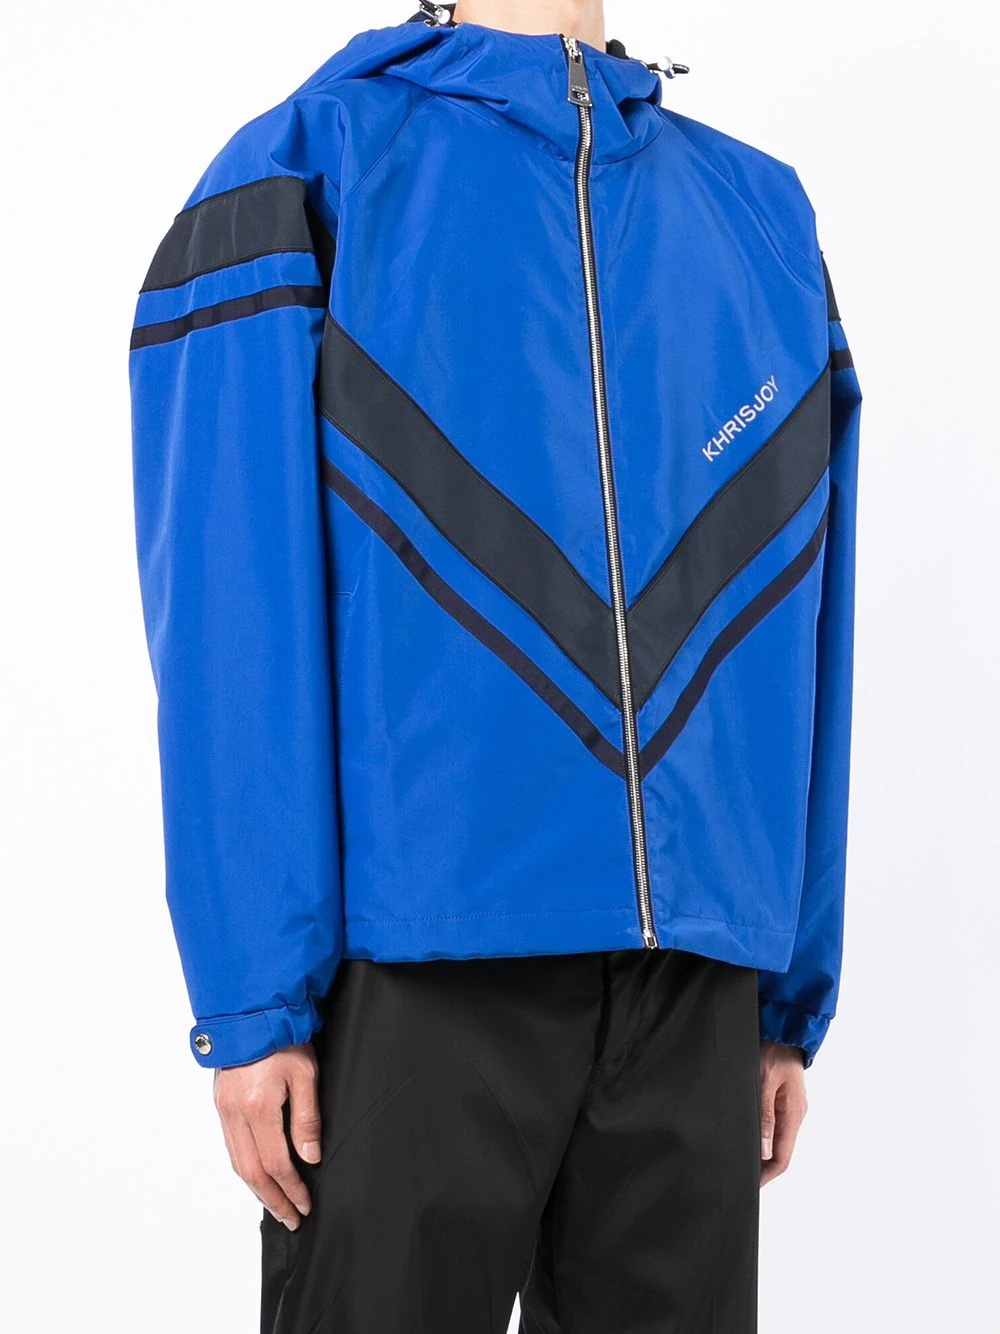 zig-zag lightweight jacket - 3